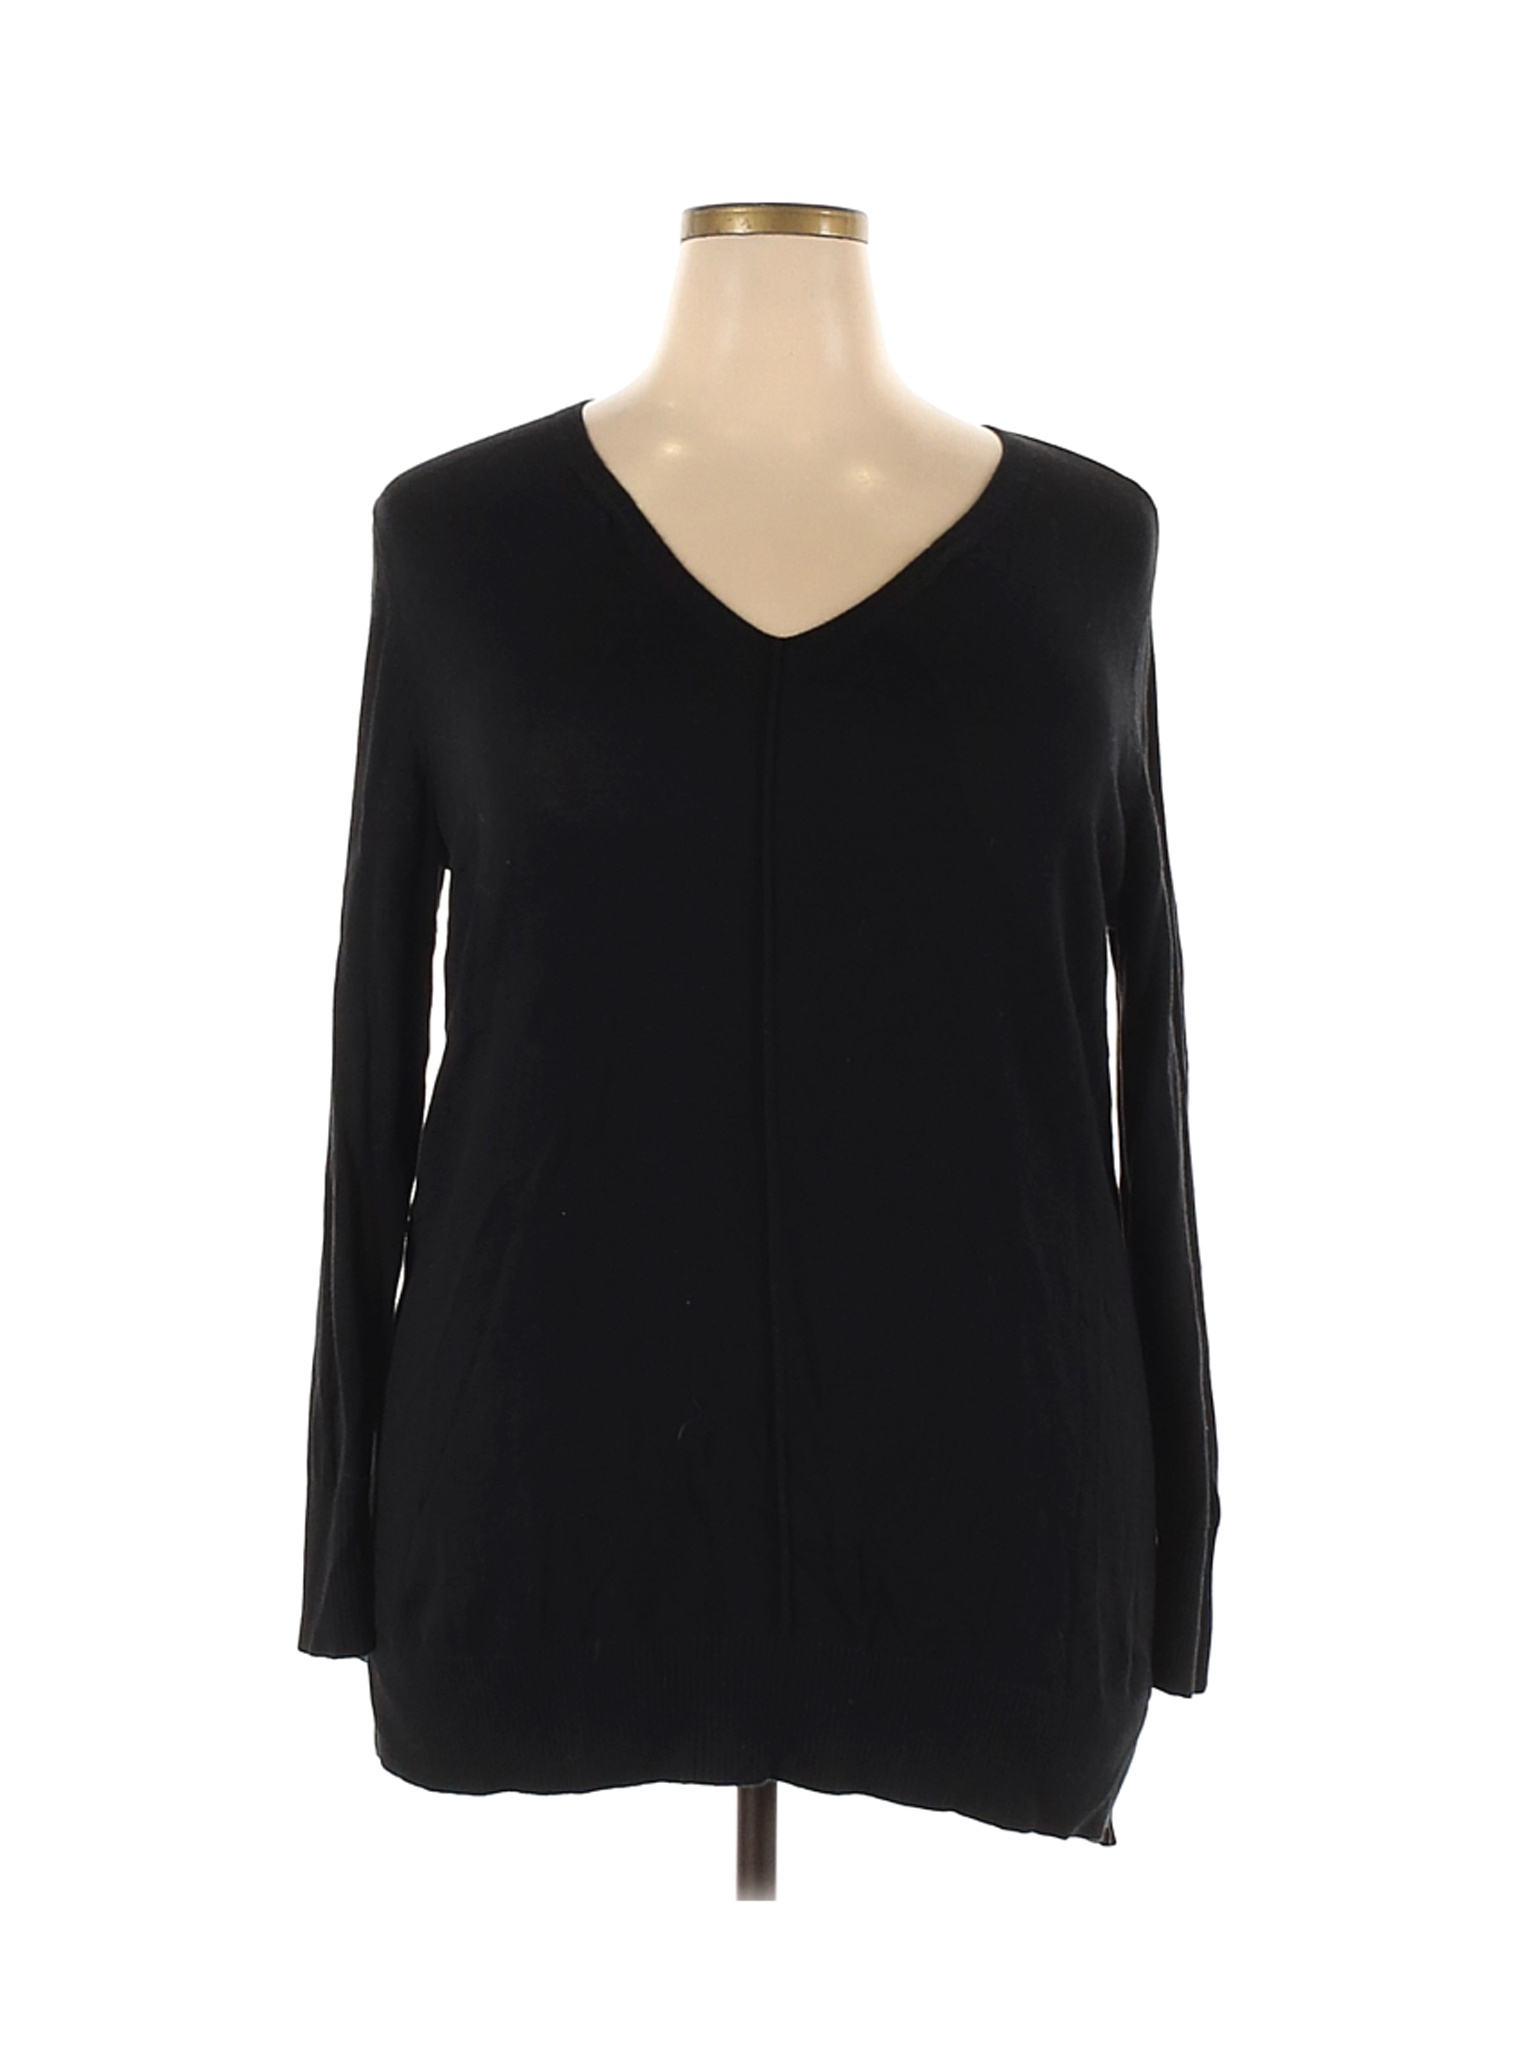 Old Navy Women Black Pullover Sweater 2X Plus | eBay